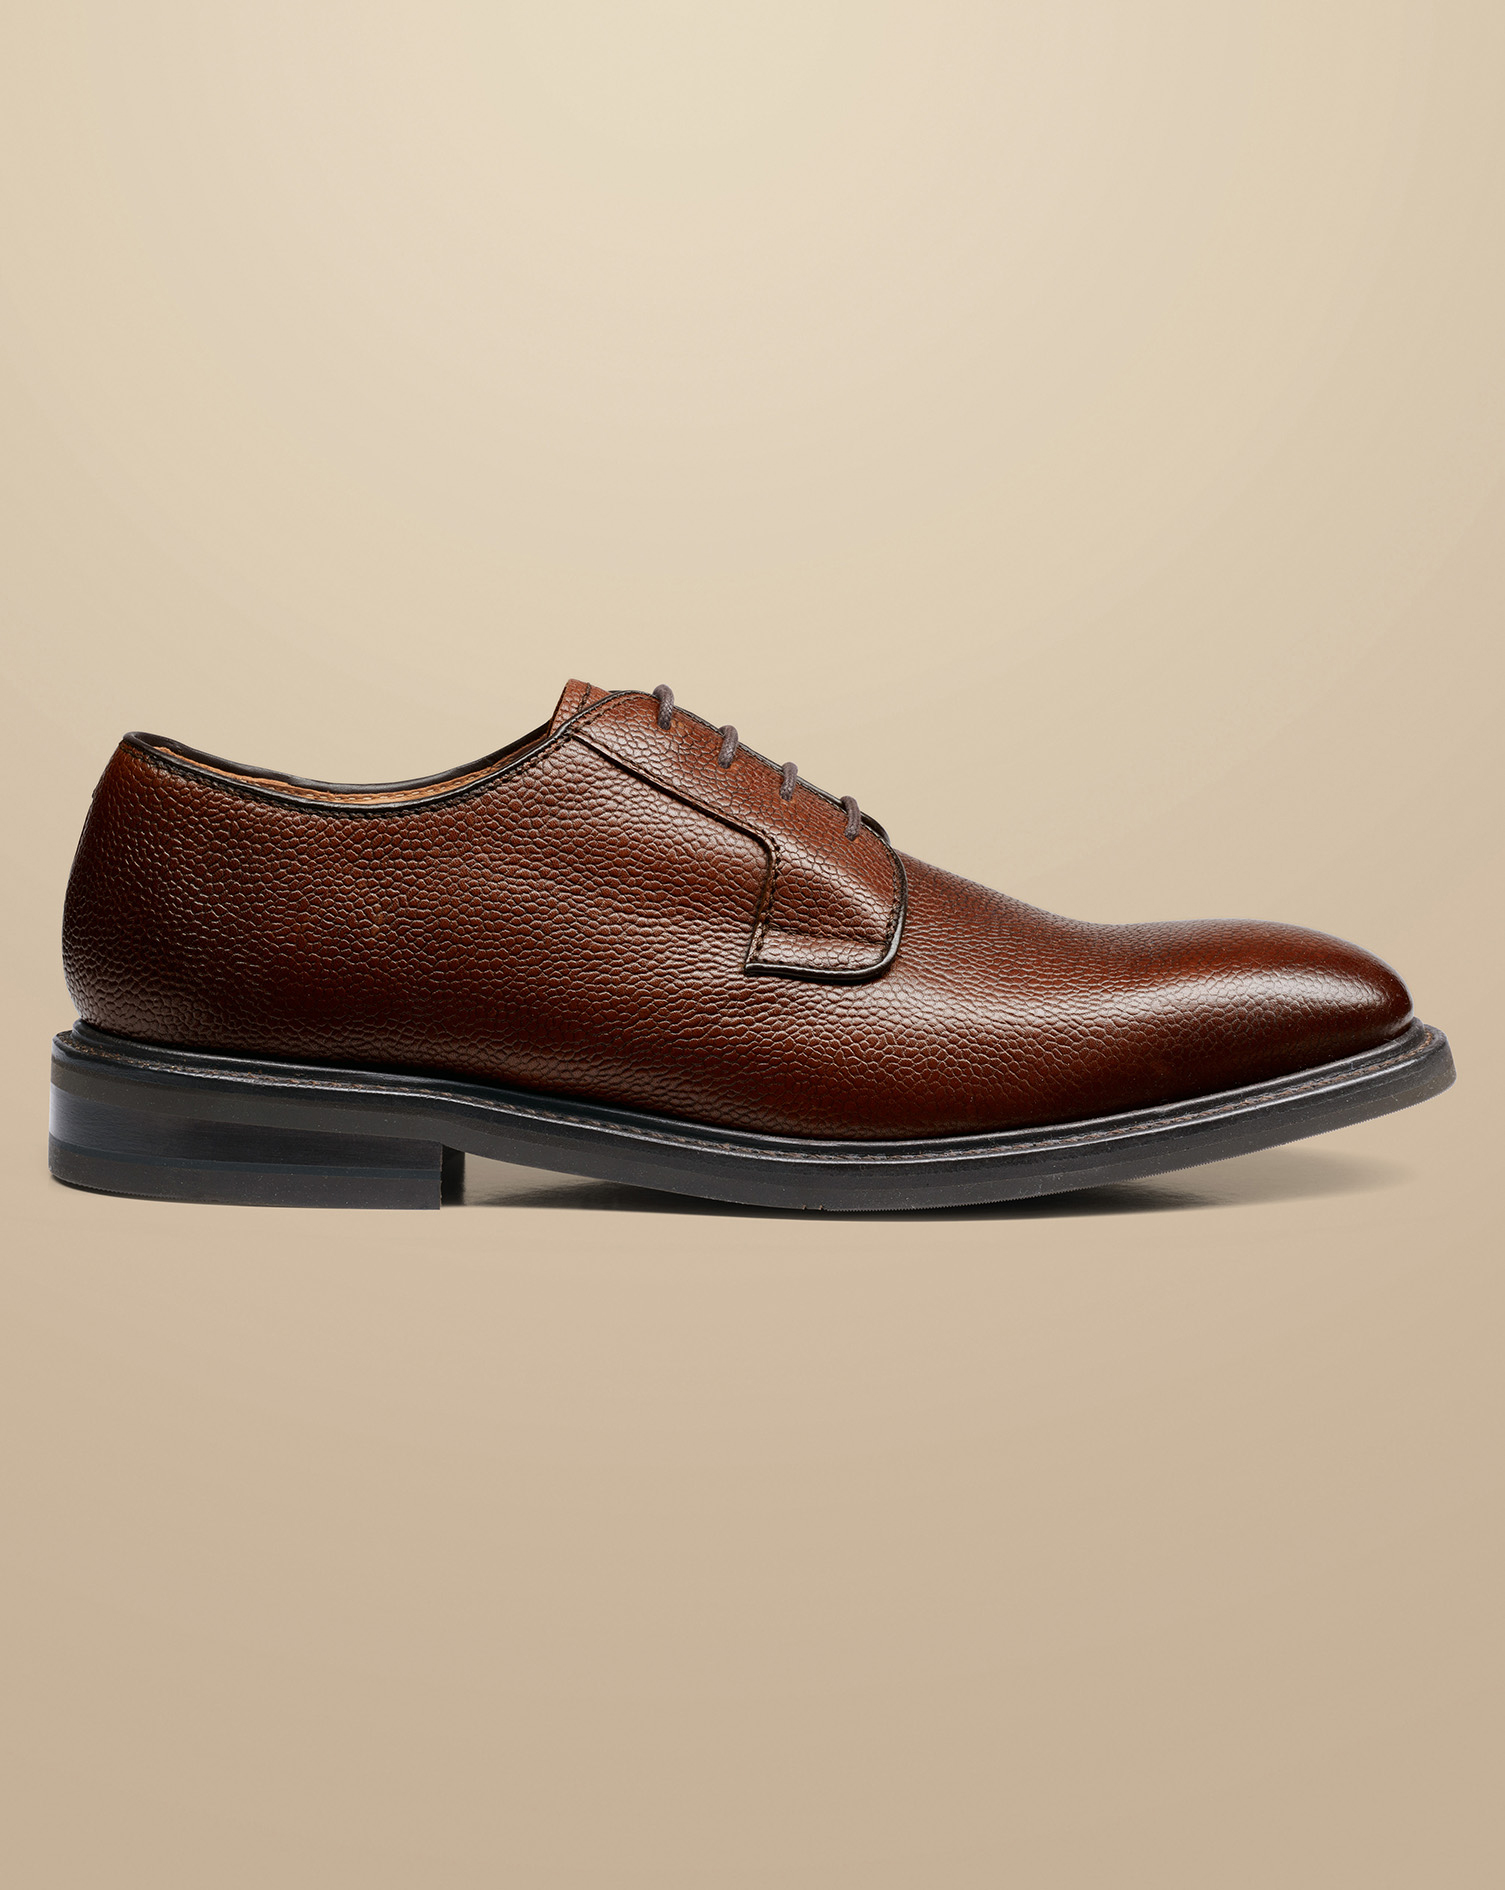 Men's Charles Tyrwhitt Grain Leather Derby Rubber Sole Shoe - Chestnut Brown Size 9
